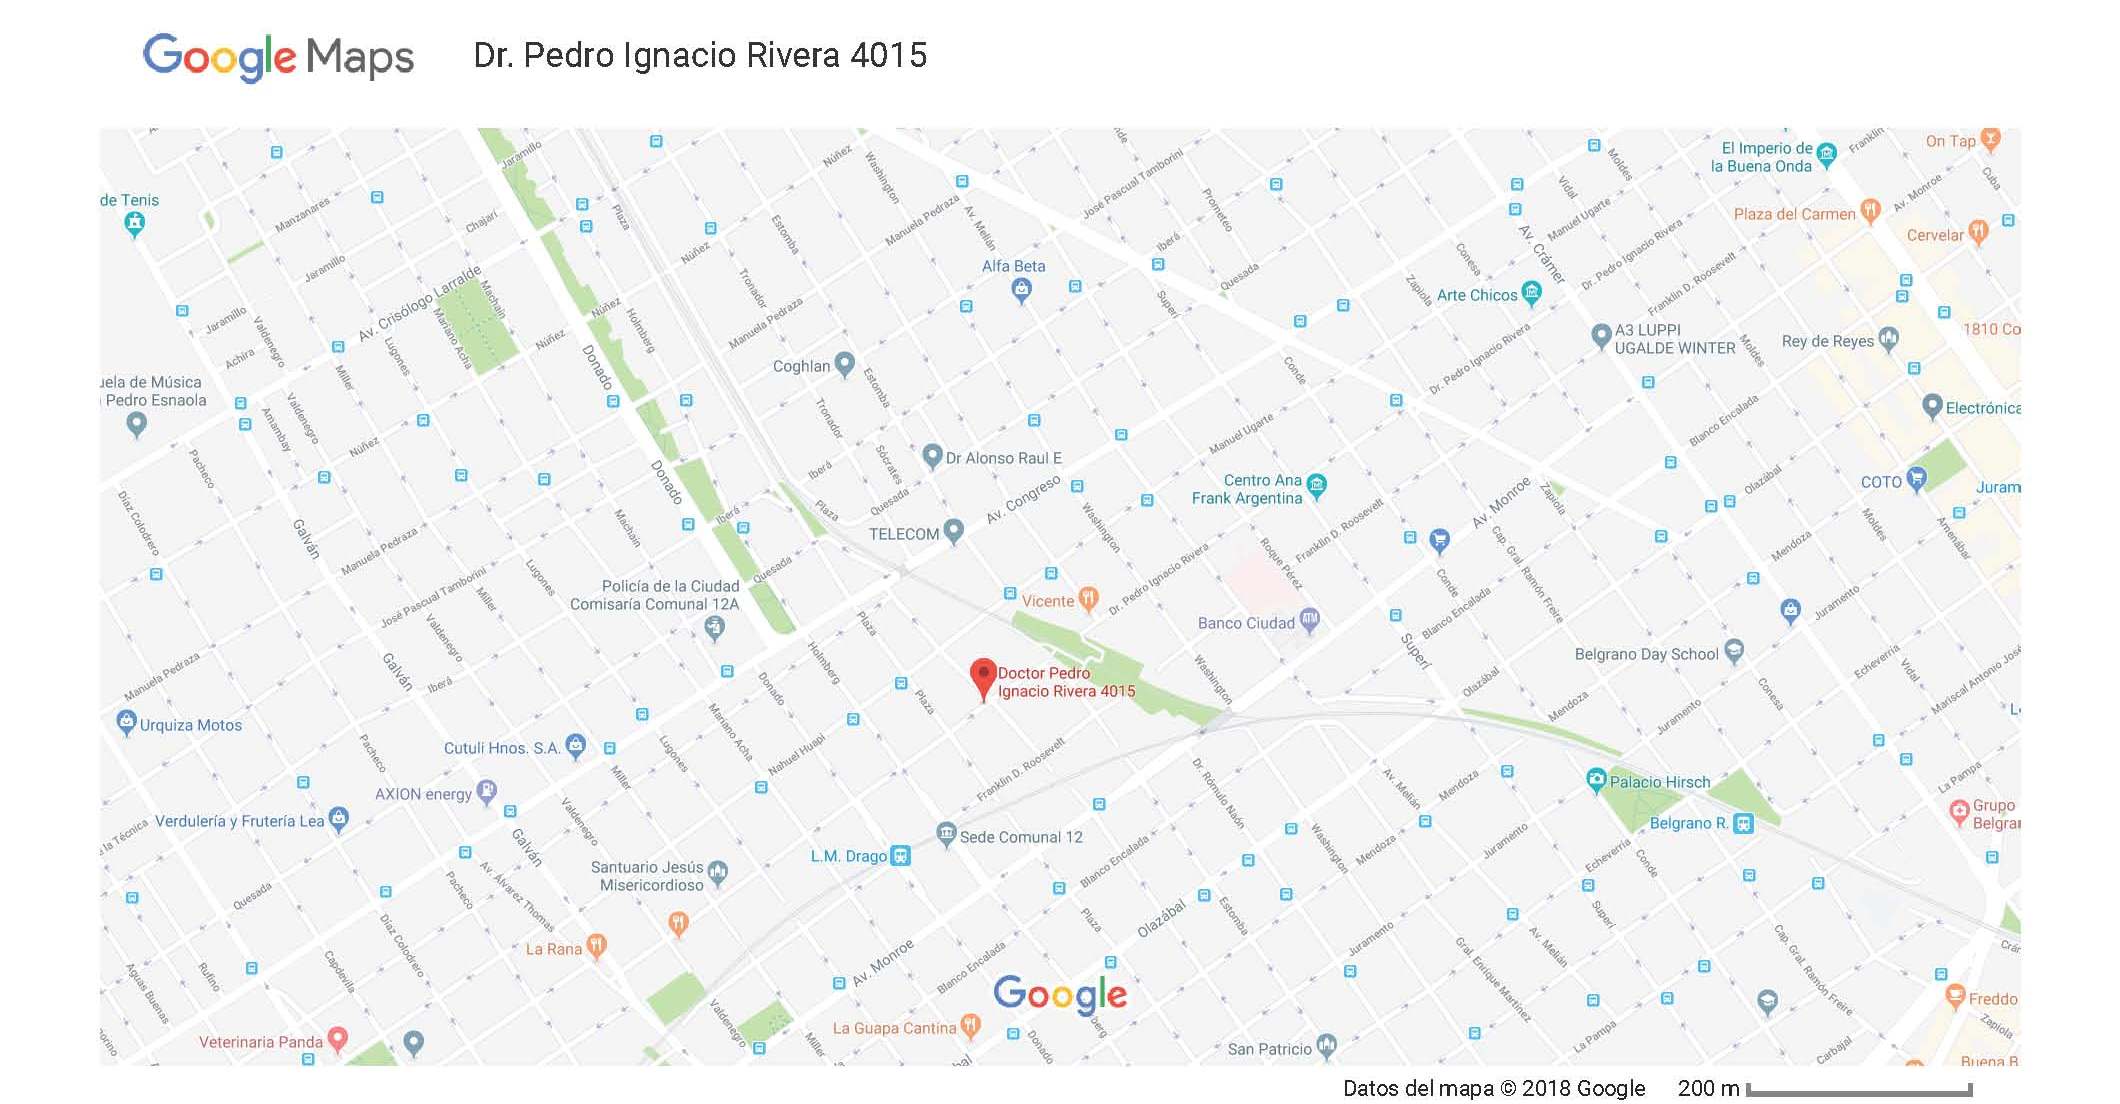 Dr. Pedro Ignacio Rivera 4015 - Google Maps